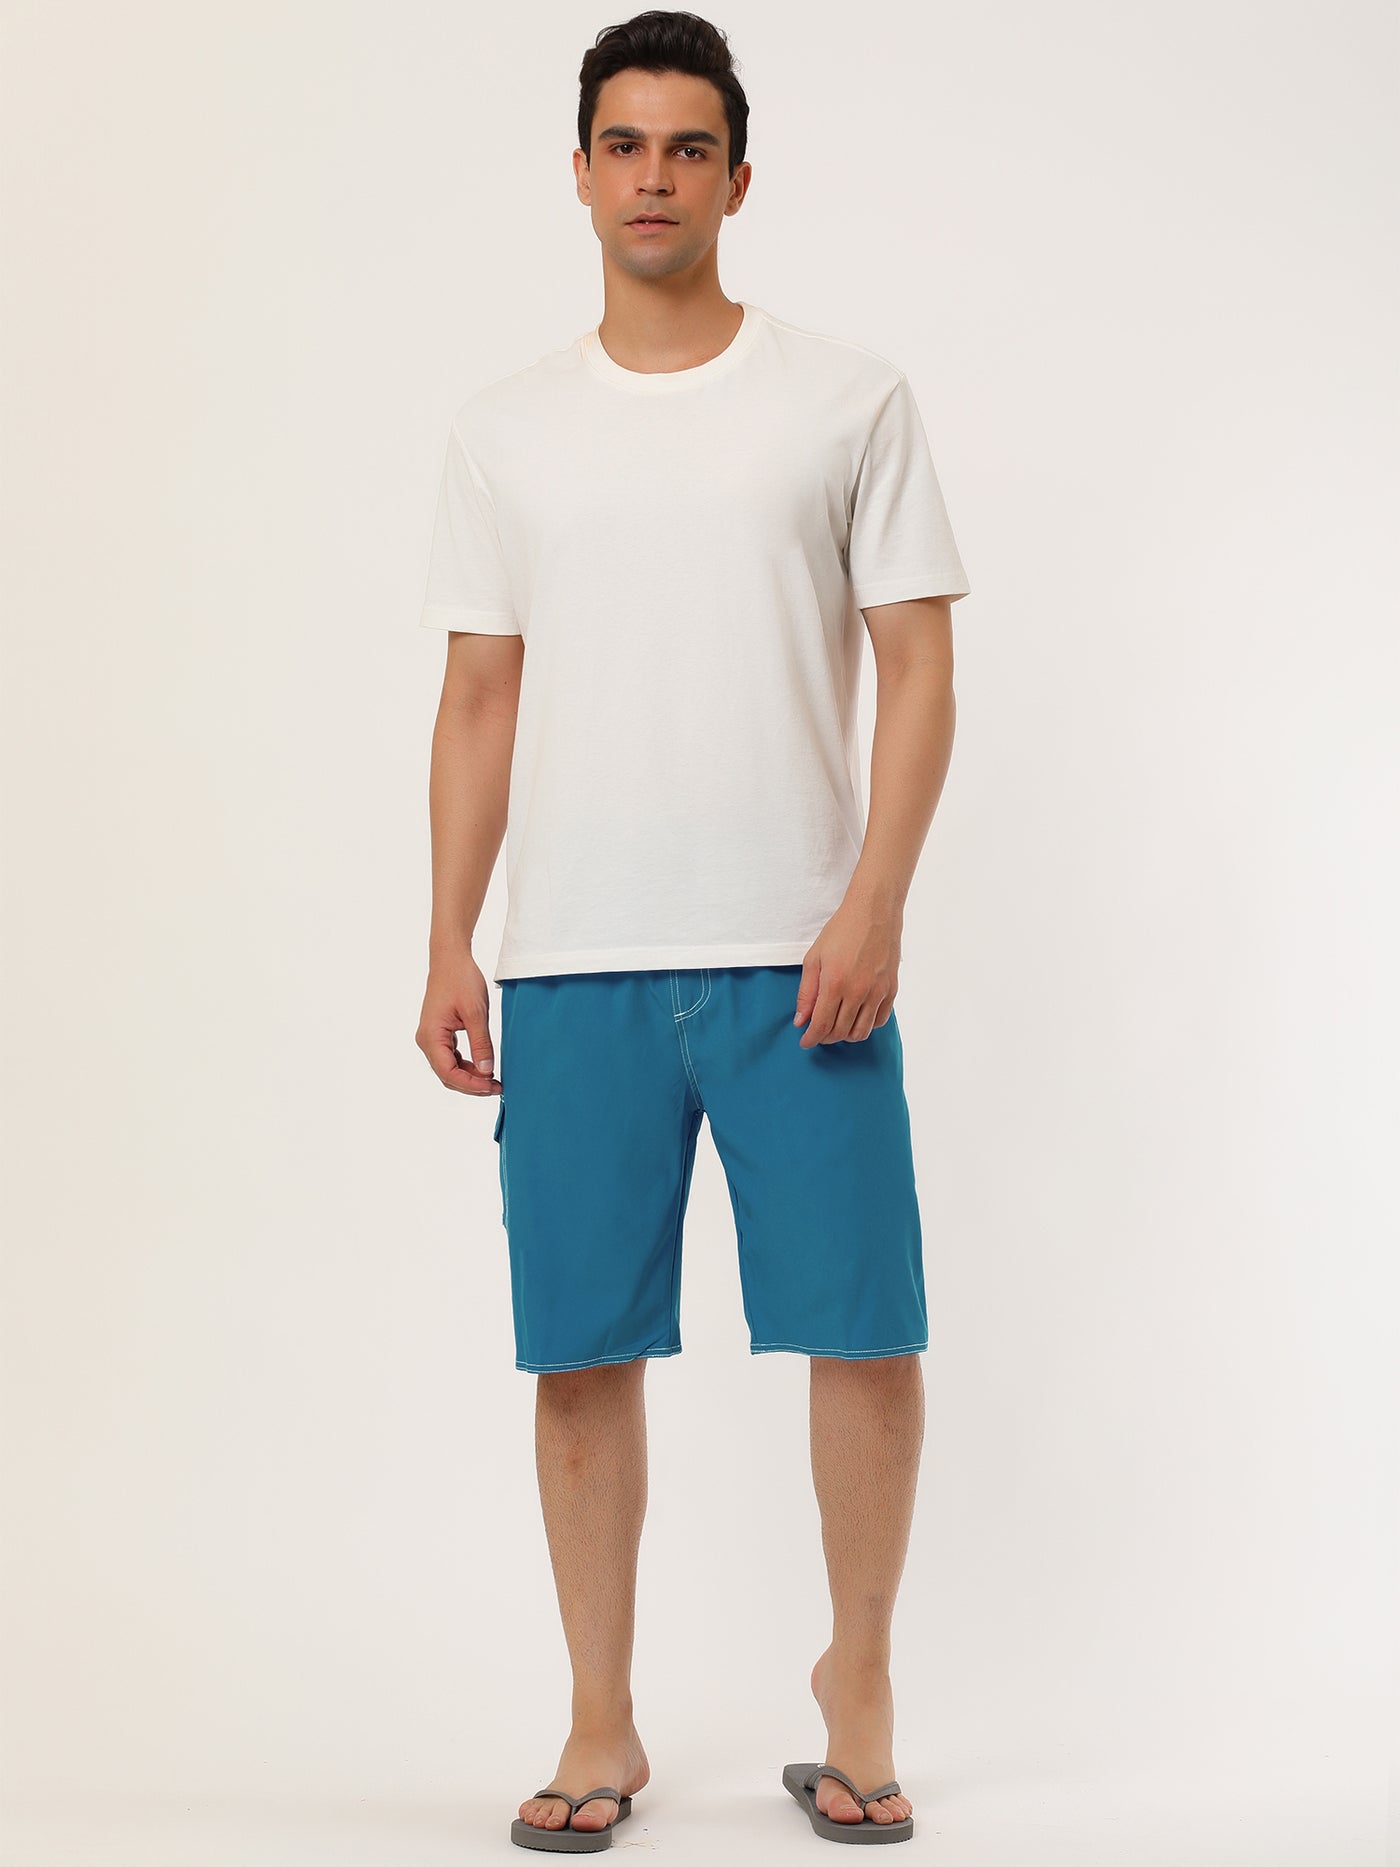 Bublédon Summer Solid Drawstring Elastic Waist Beach Shorts